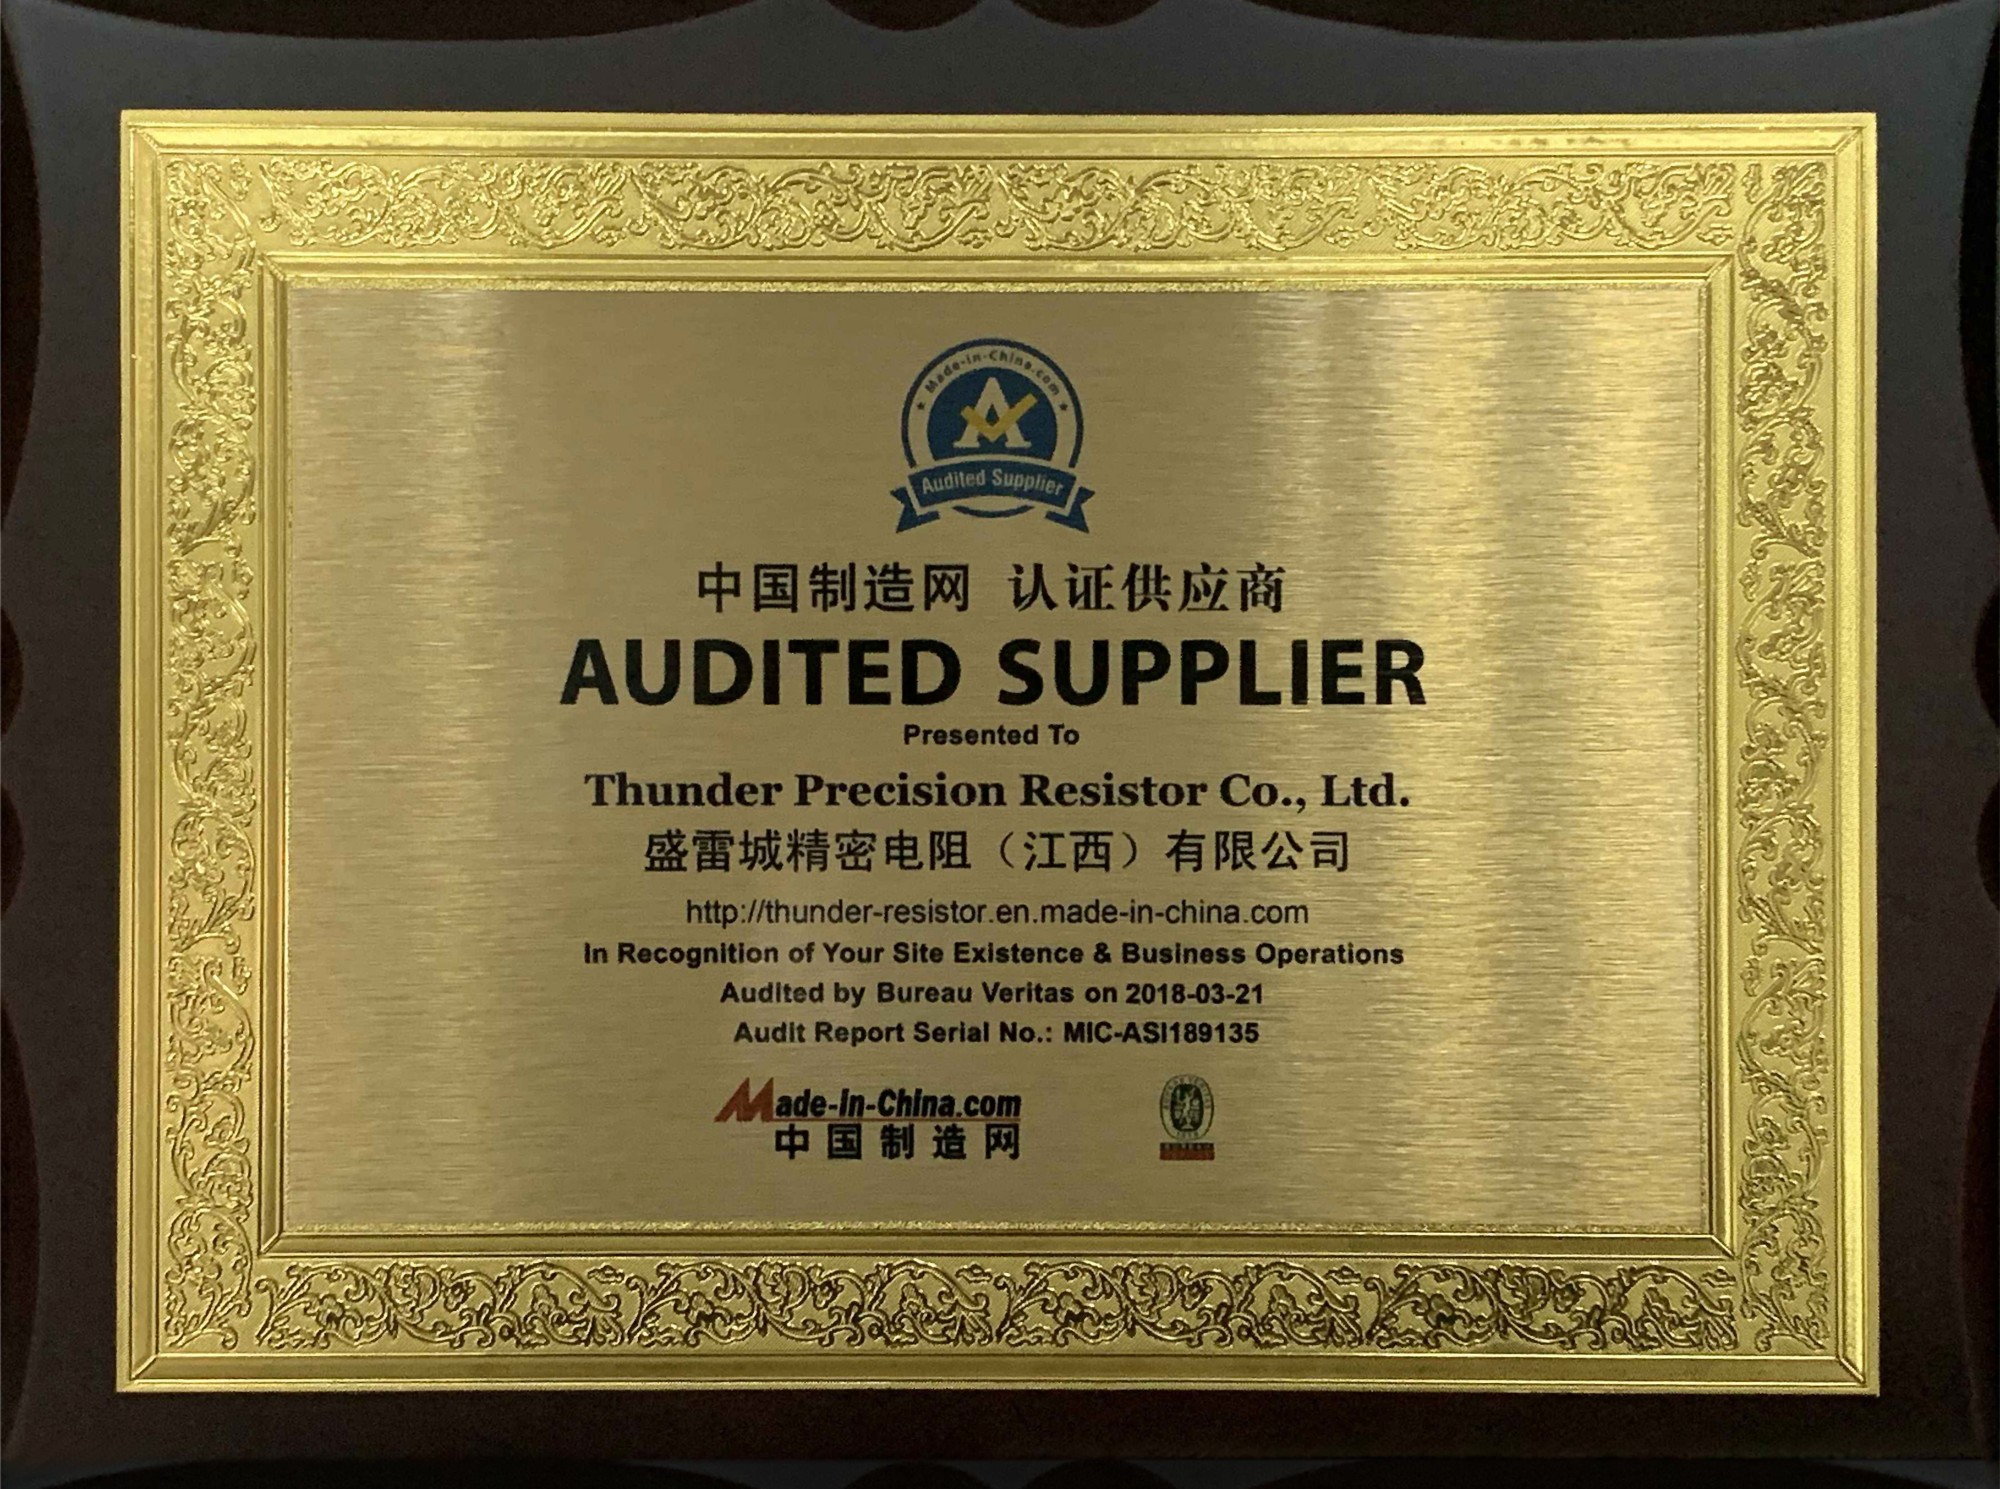 Made-in China certificate